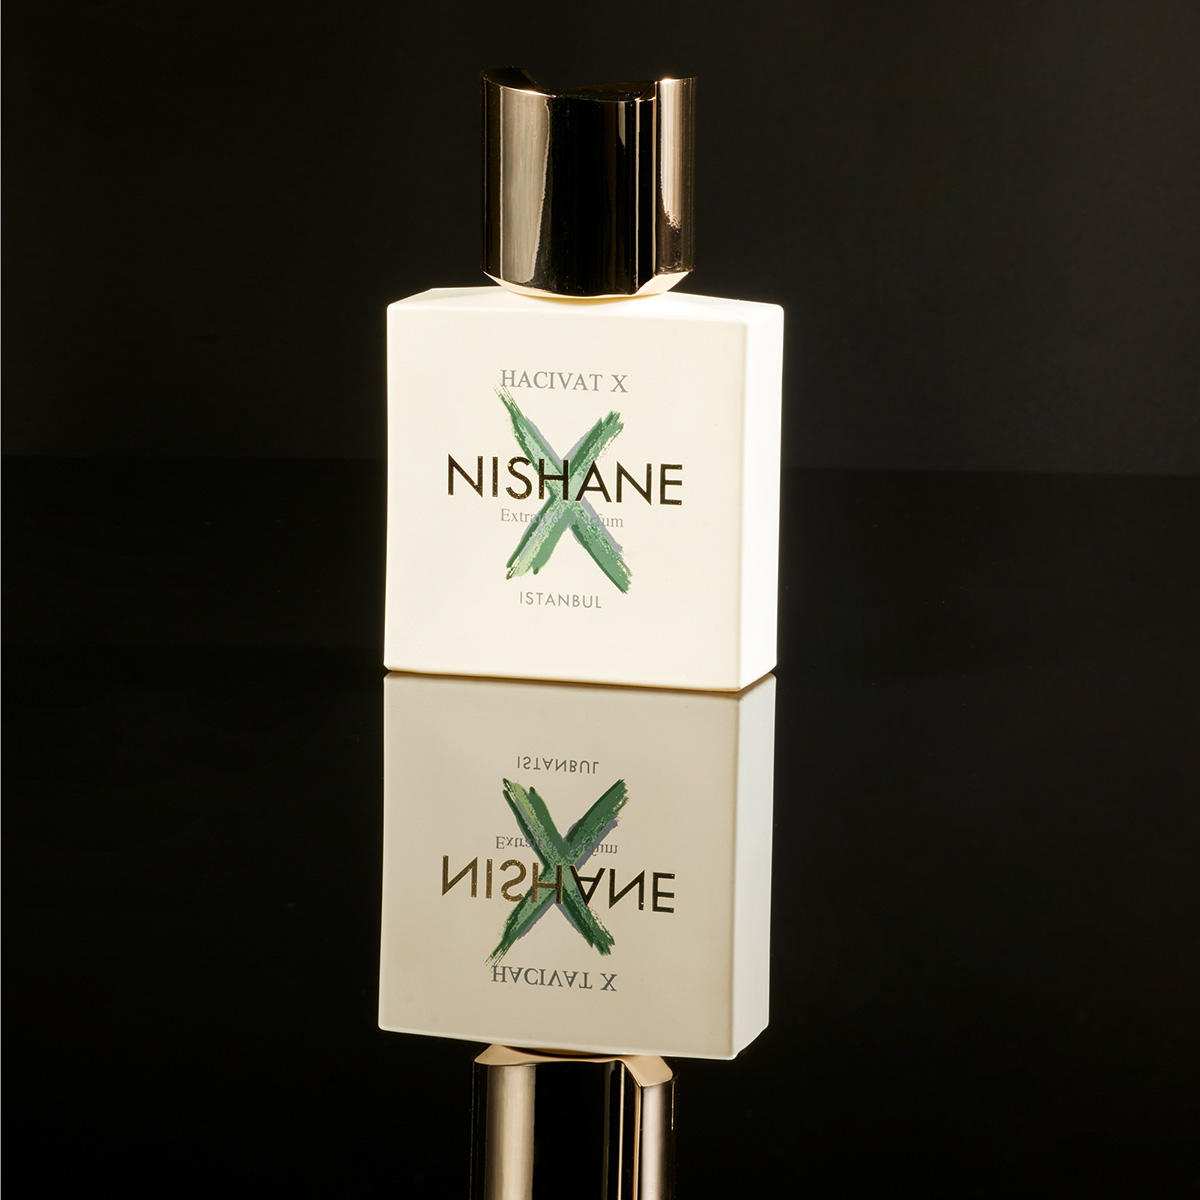 NISHANE Hacivat X Extrait de Parfum 50 ml - 3